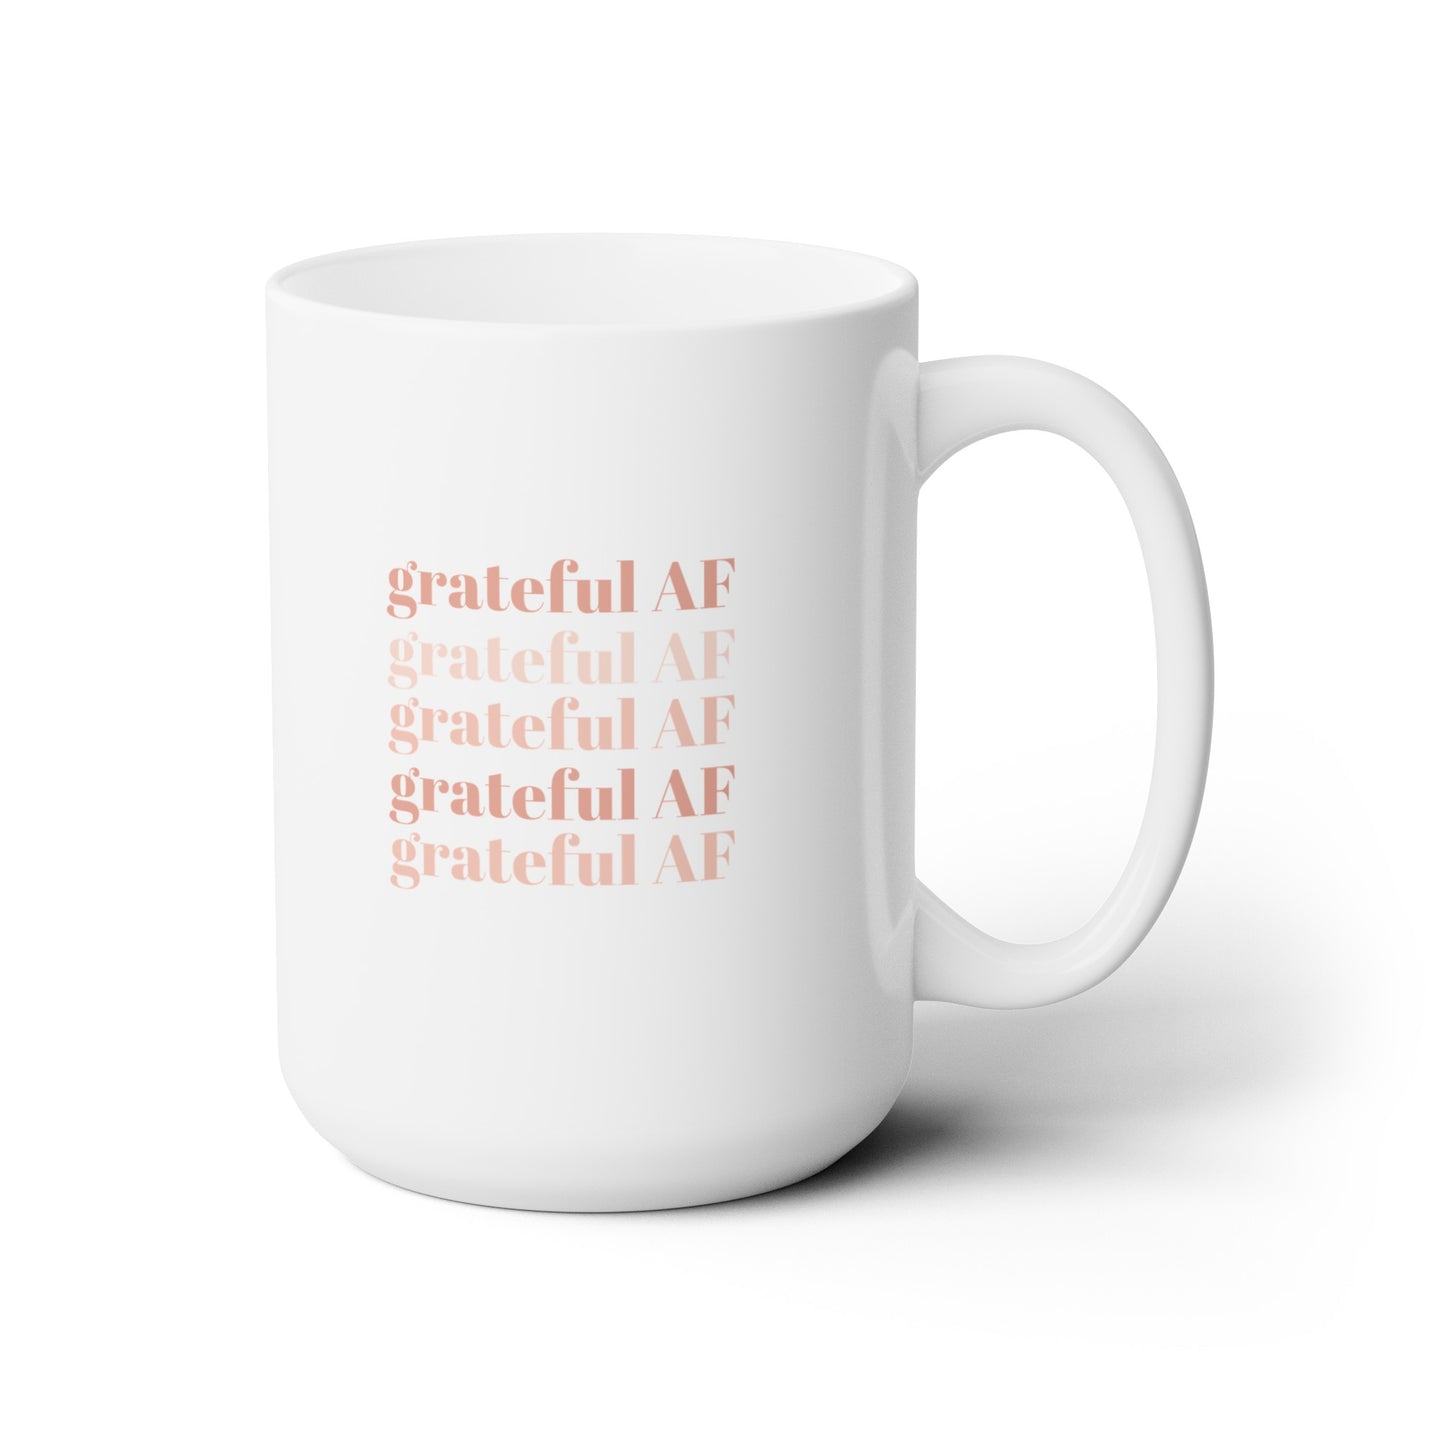 grateful AF mug